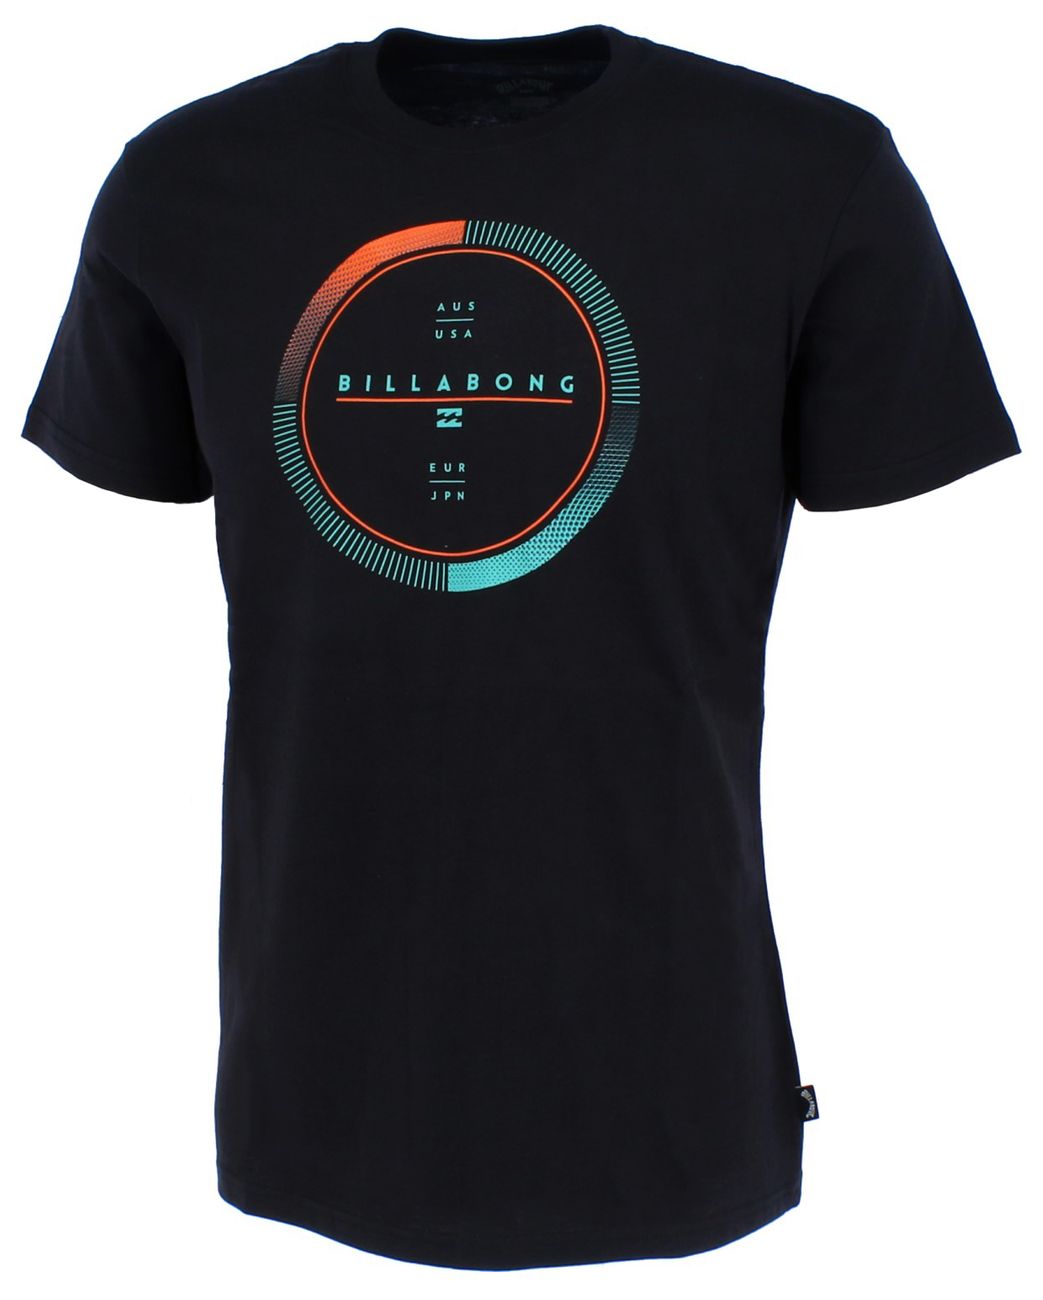 BILLABONG FULL ROTATOR Herren T-Shirt 100% Baumwolle - BillaBong - SAGATOO - 3664564976668